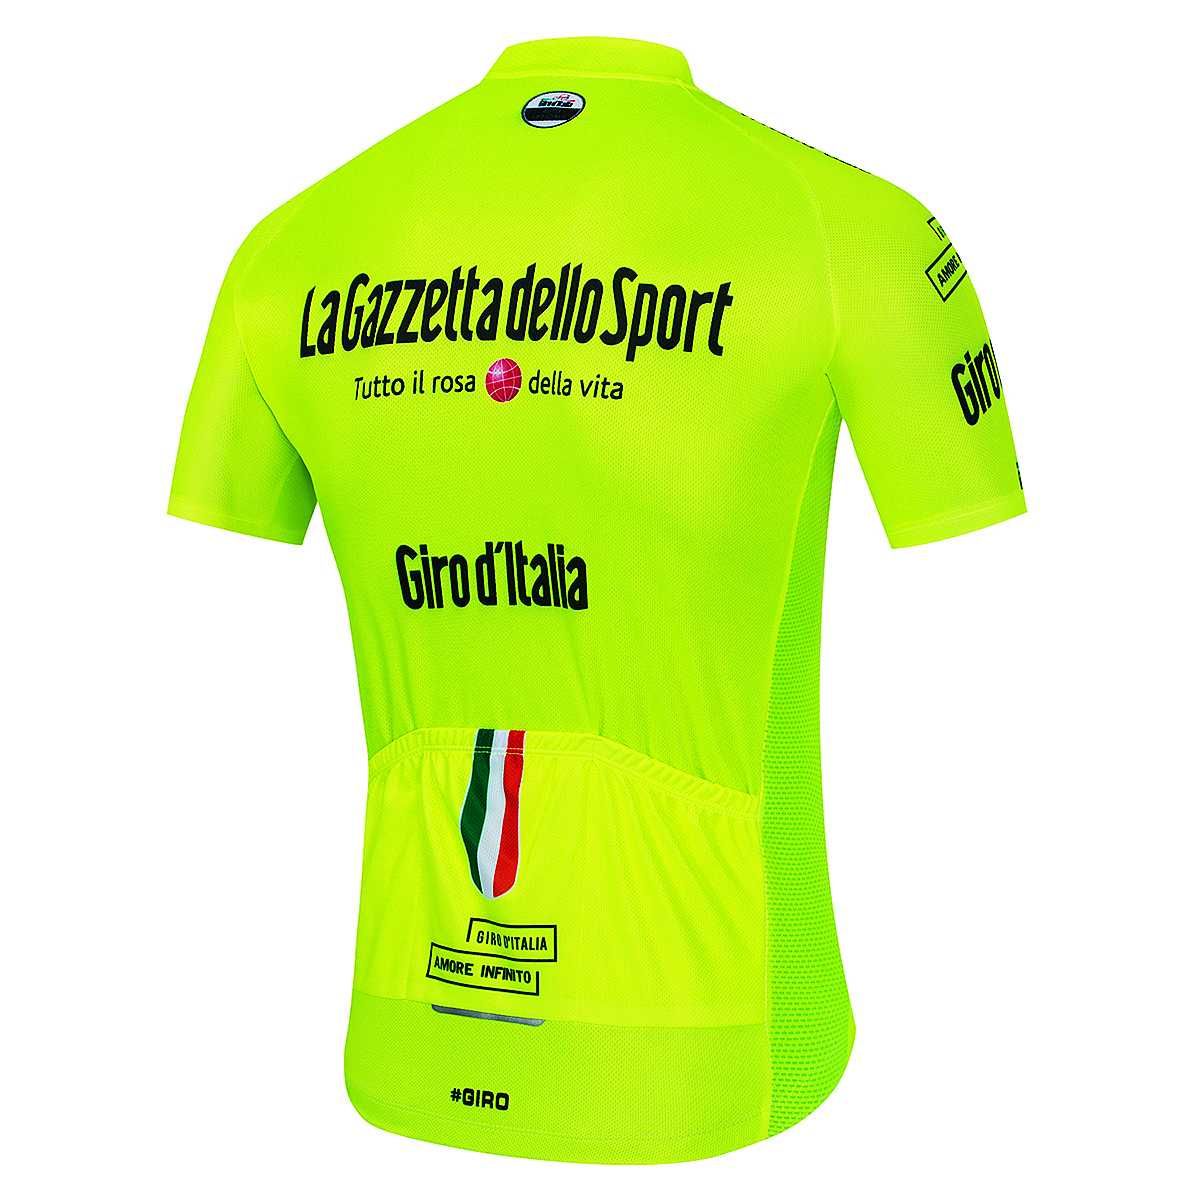 Nowa koszulka kolarska GIRO d'ITALIA rozmiar L i XL Neonowa